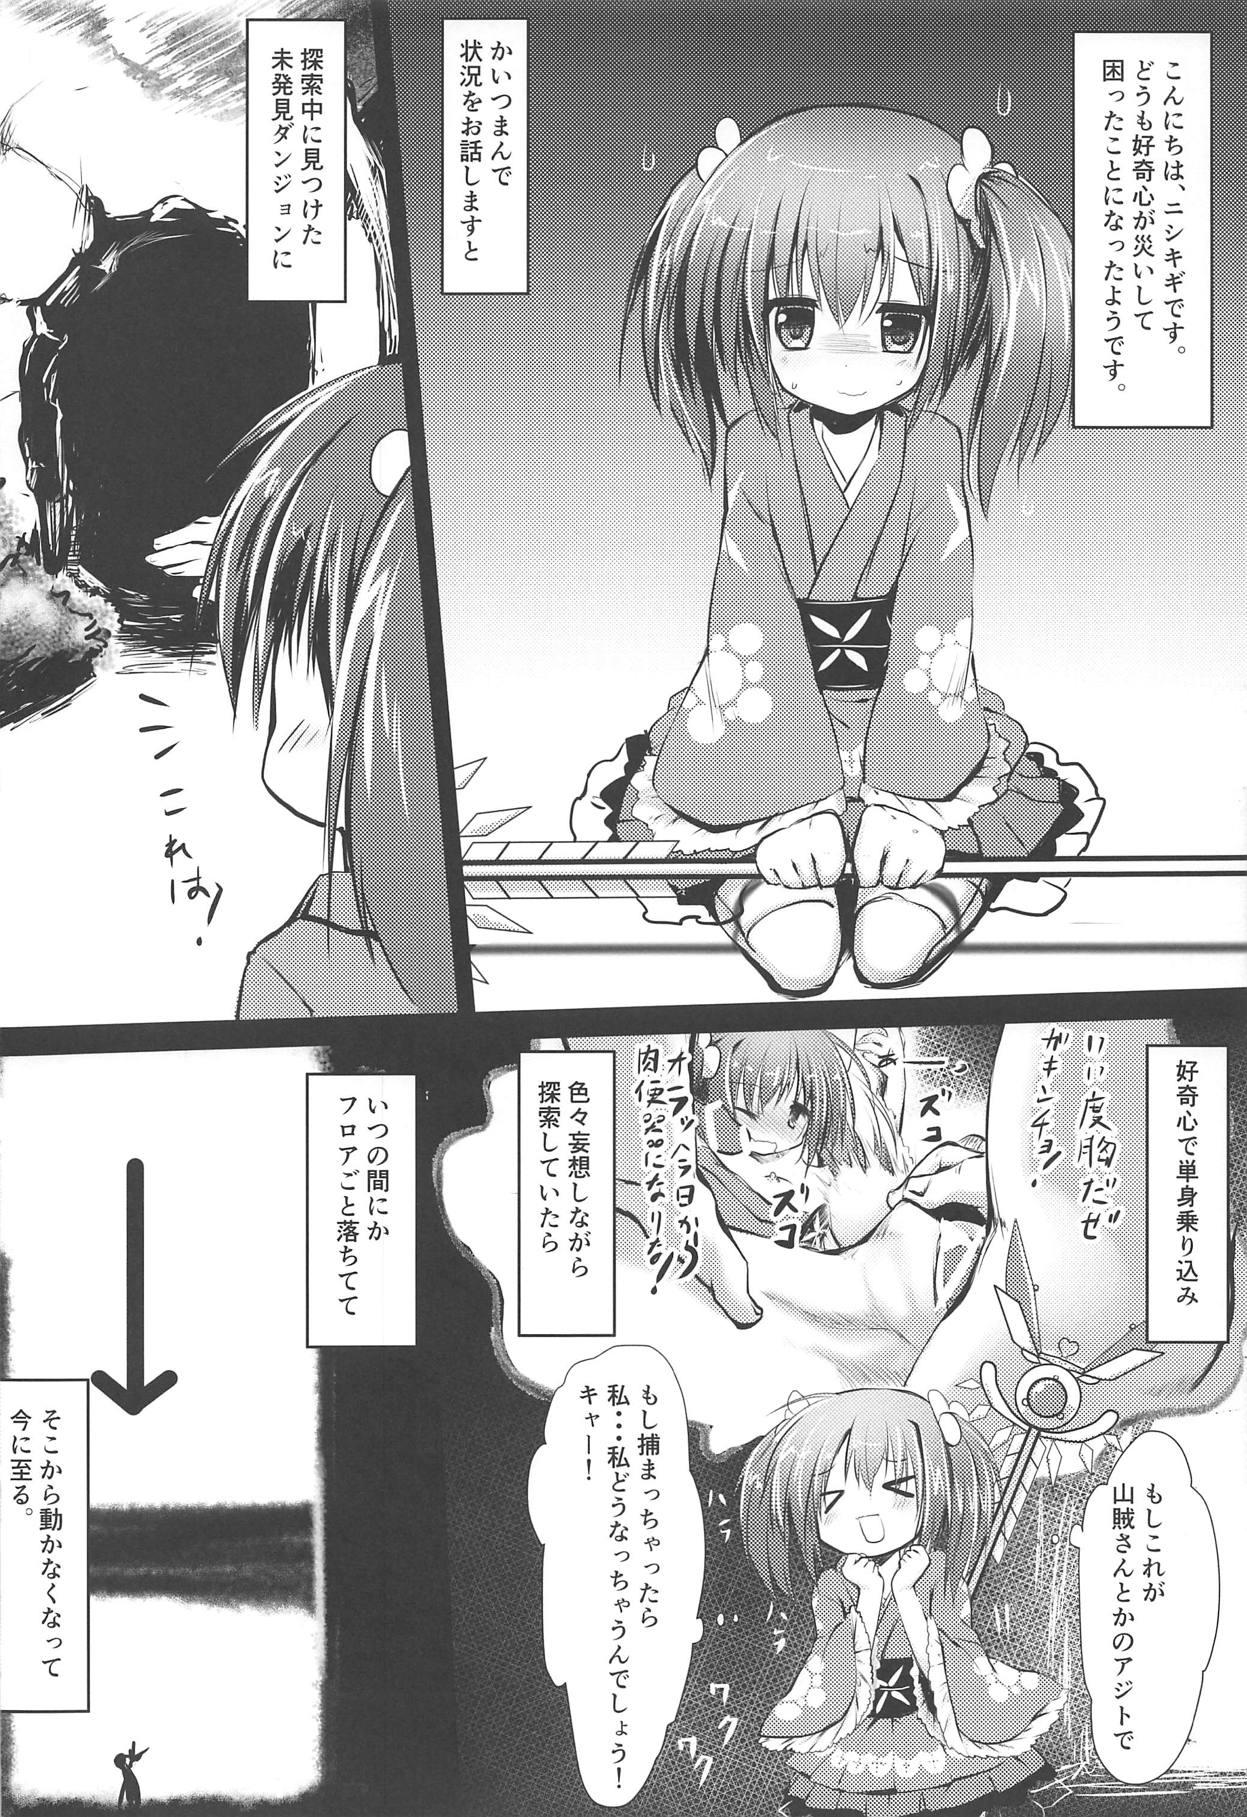 Nice Nishikigi VS Ero Trap D - Flower knight girl Fudendo - Page 3